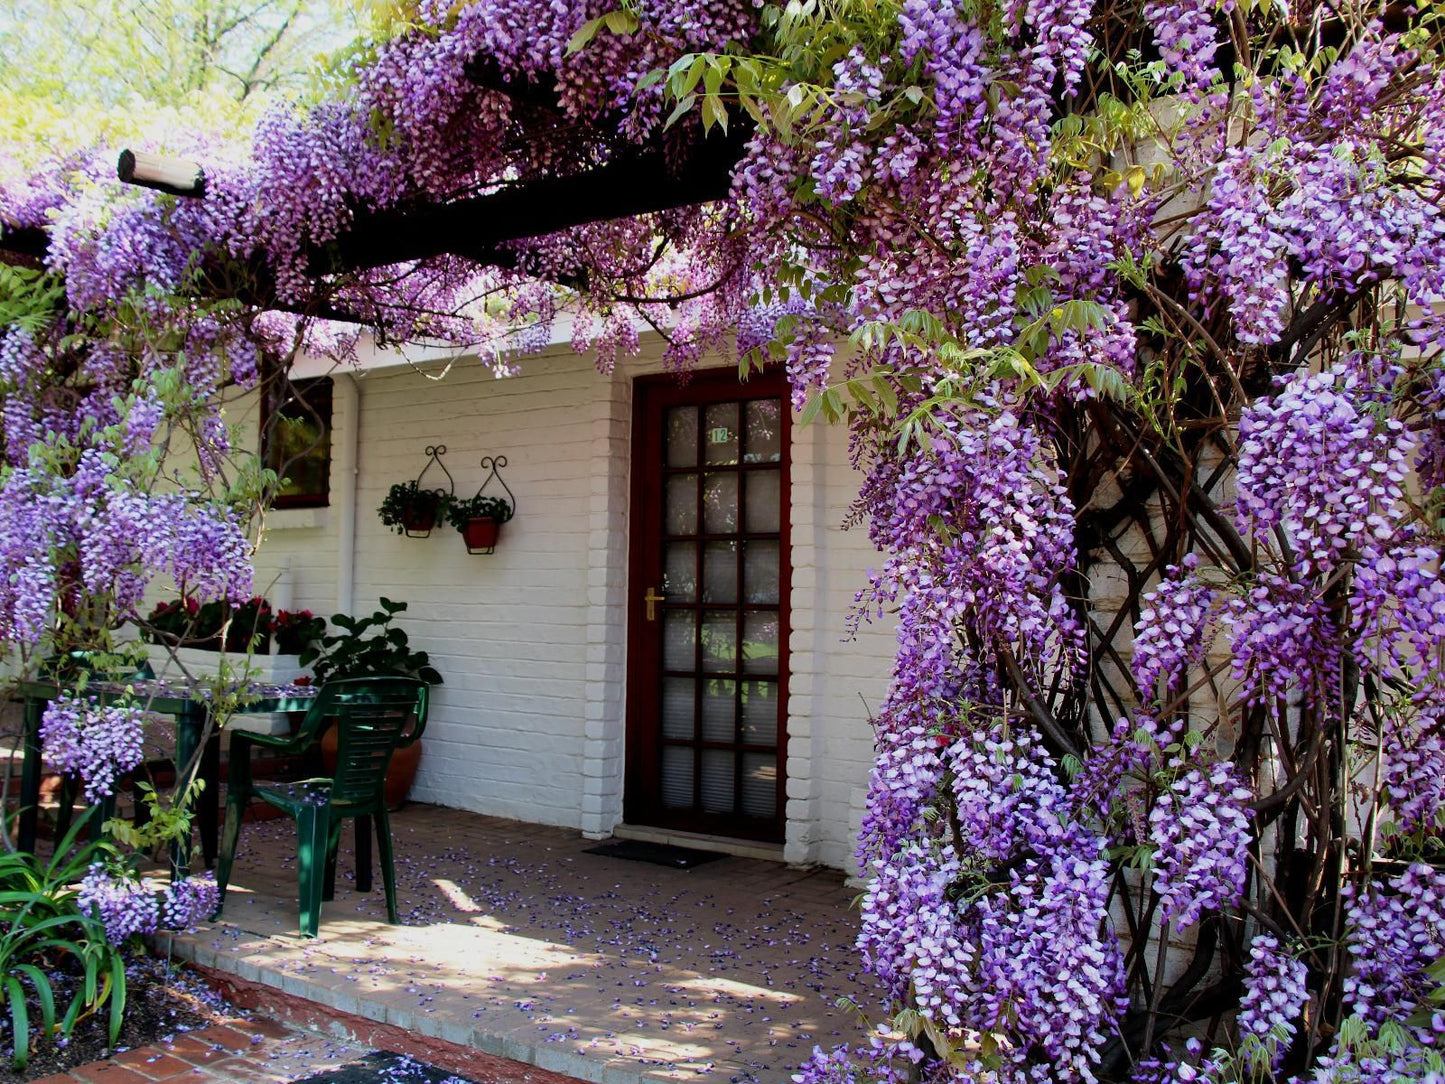 Rivonia Premier Lodge Rivonia Johannesburg Gauteng South Africa Blossom, Plant, Nature, House, Building, Architecture, Garden